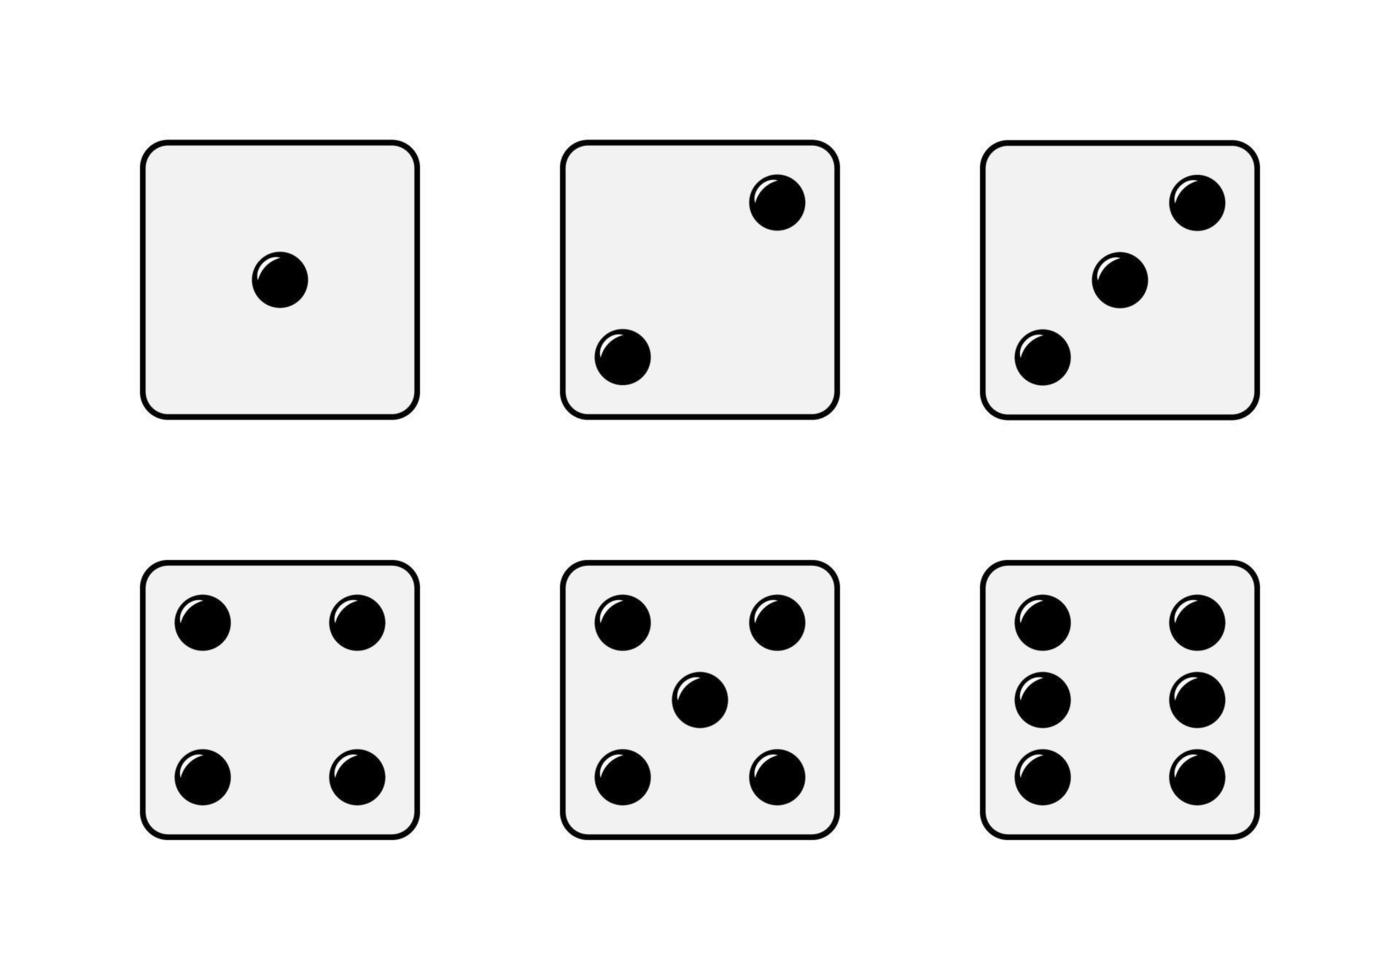 dado conjunto con seis caras con diferente números de puntos aislado vector